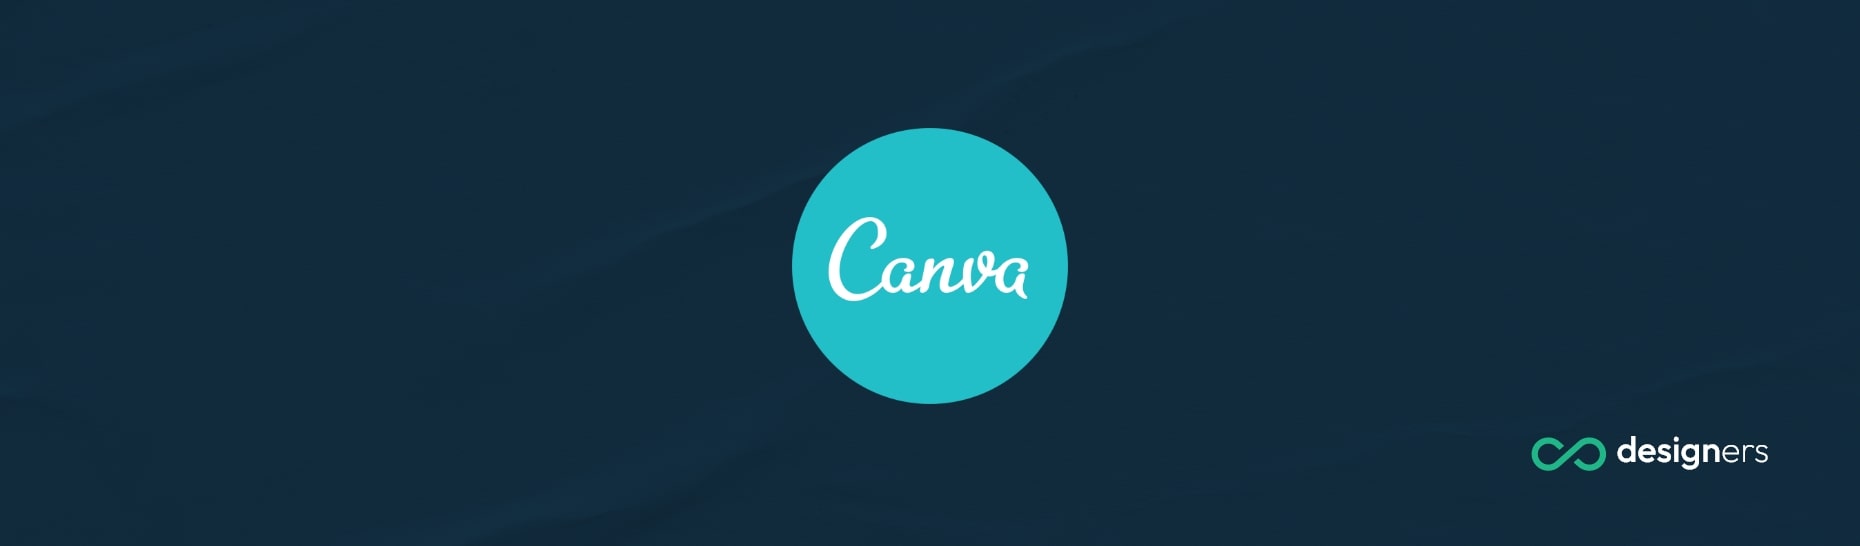 How Do I Add a Progress Bar in Canva?